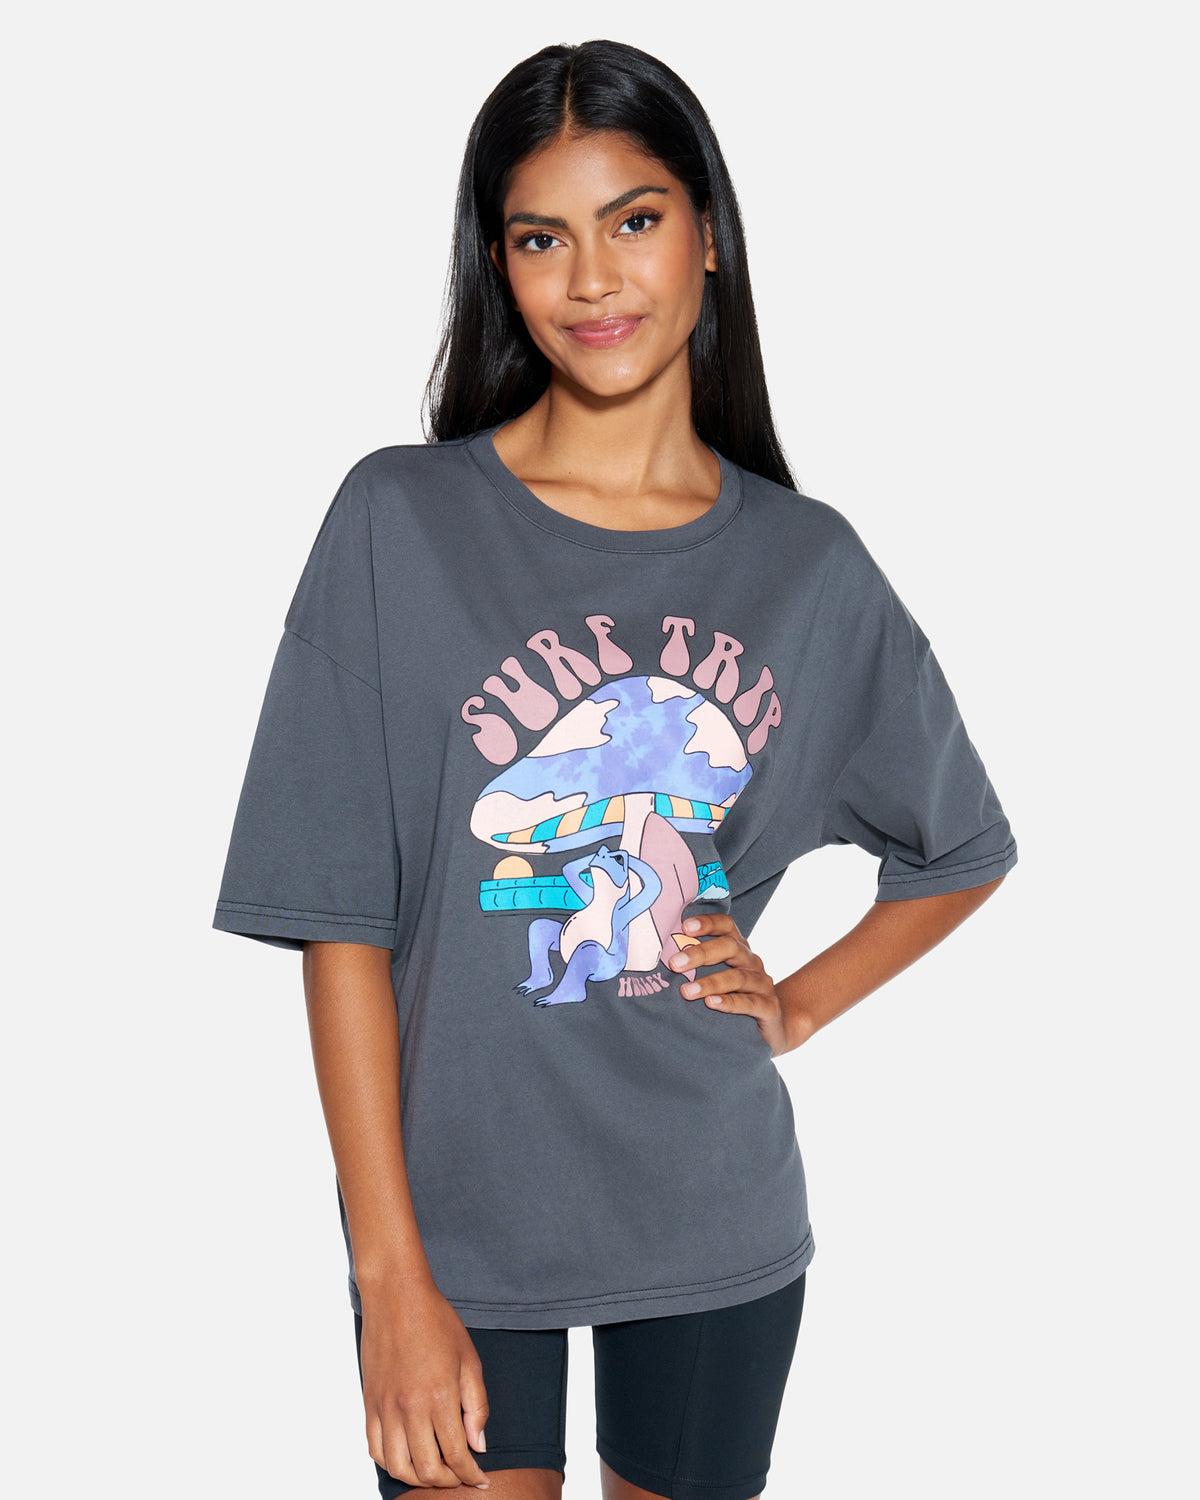 Women\'s Tops - Shirts, Sweaters | Hurley